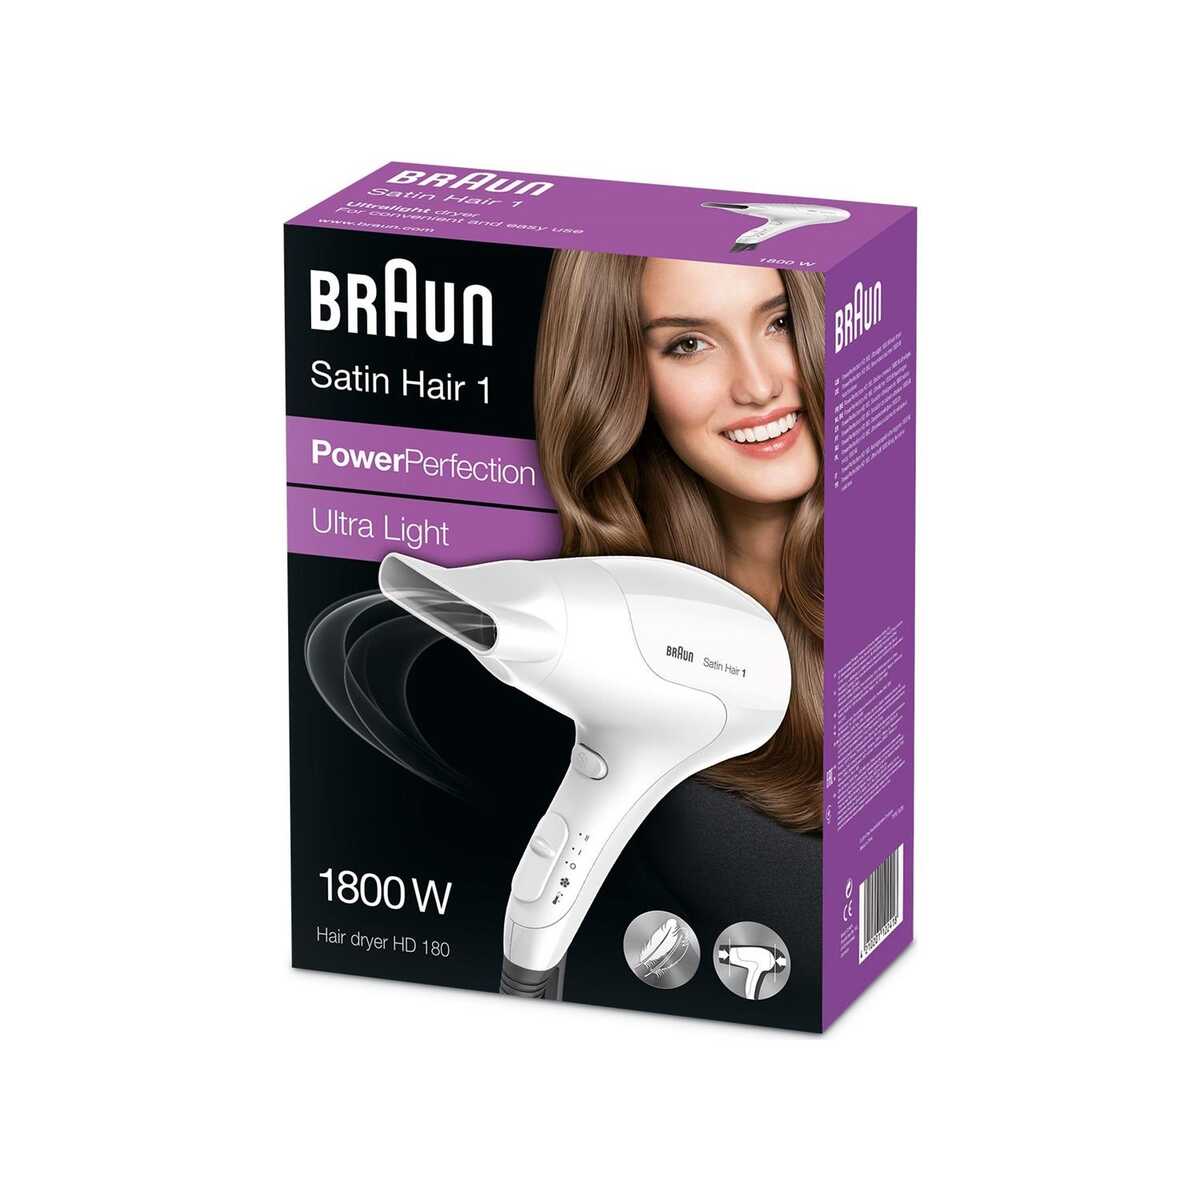 Braun Satin Hair 1 PowerPerfection HD180 Saç Kurutma Makinesi